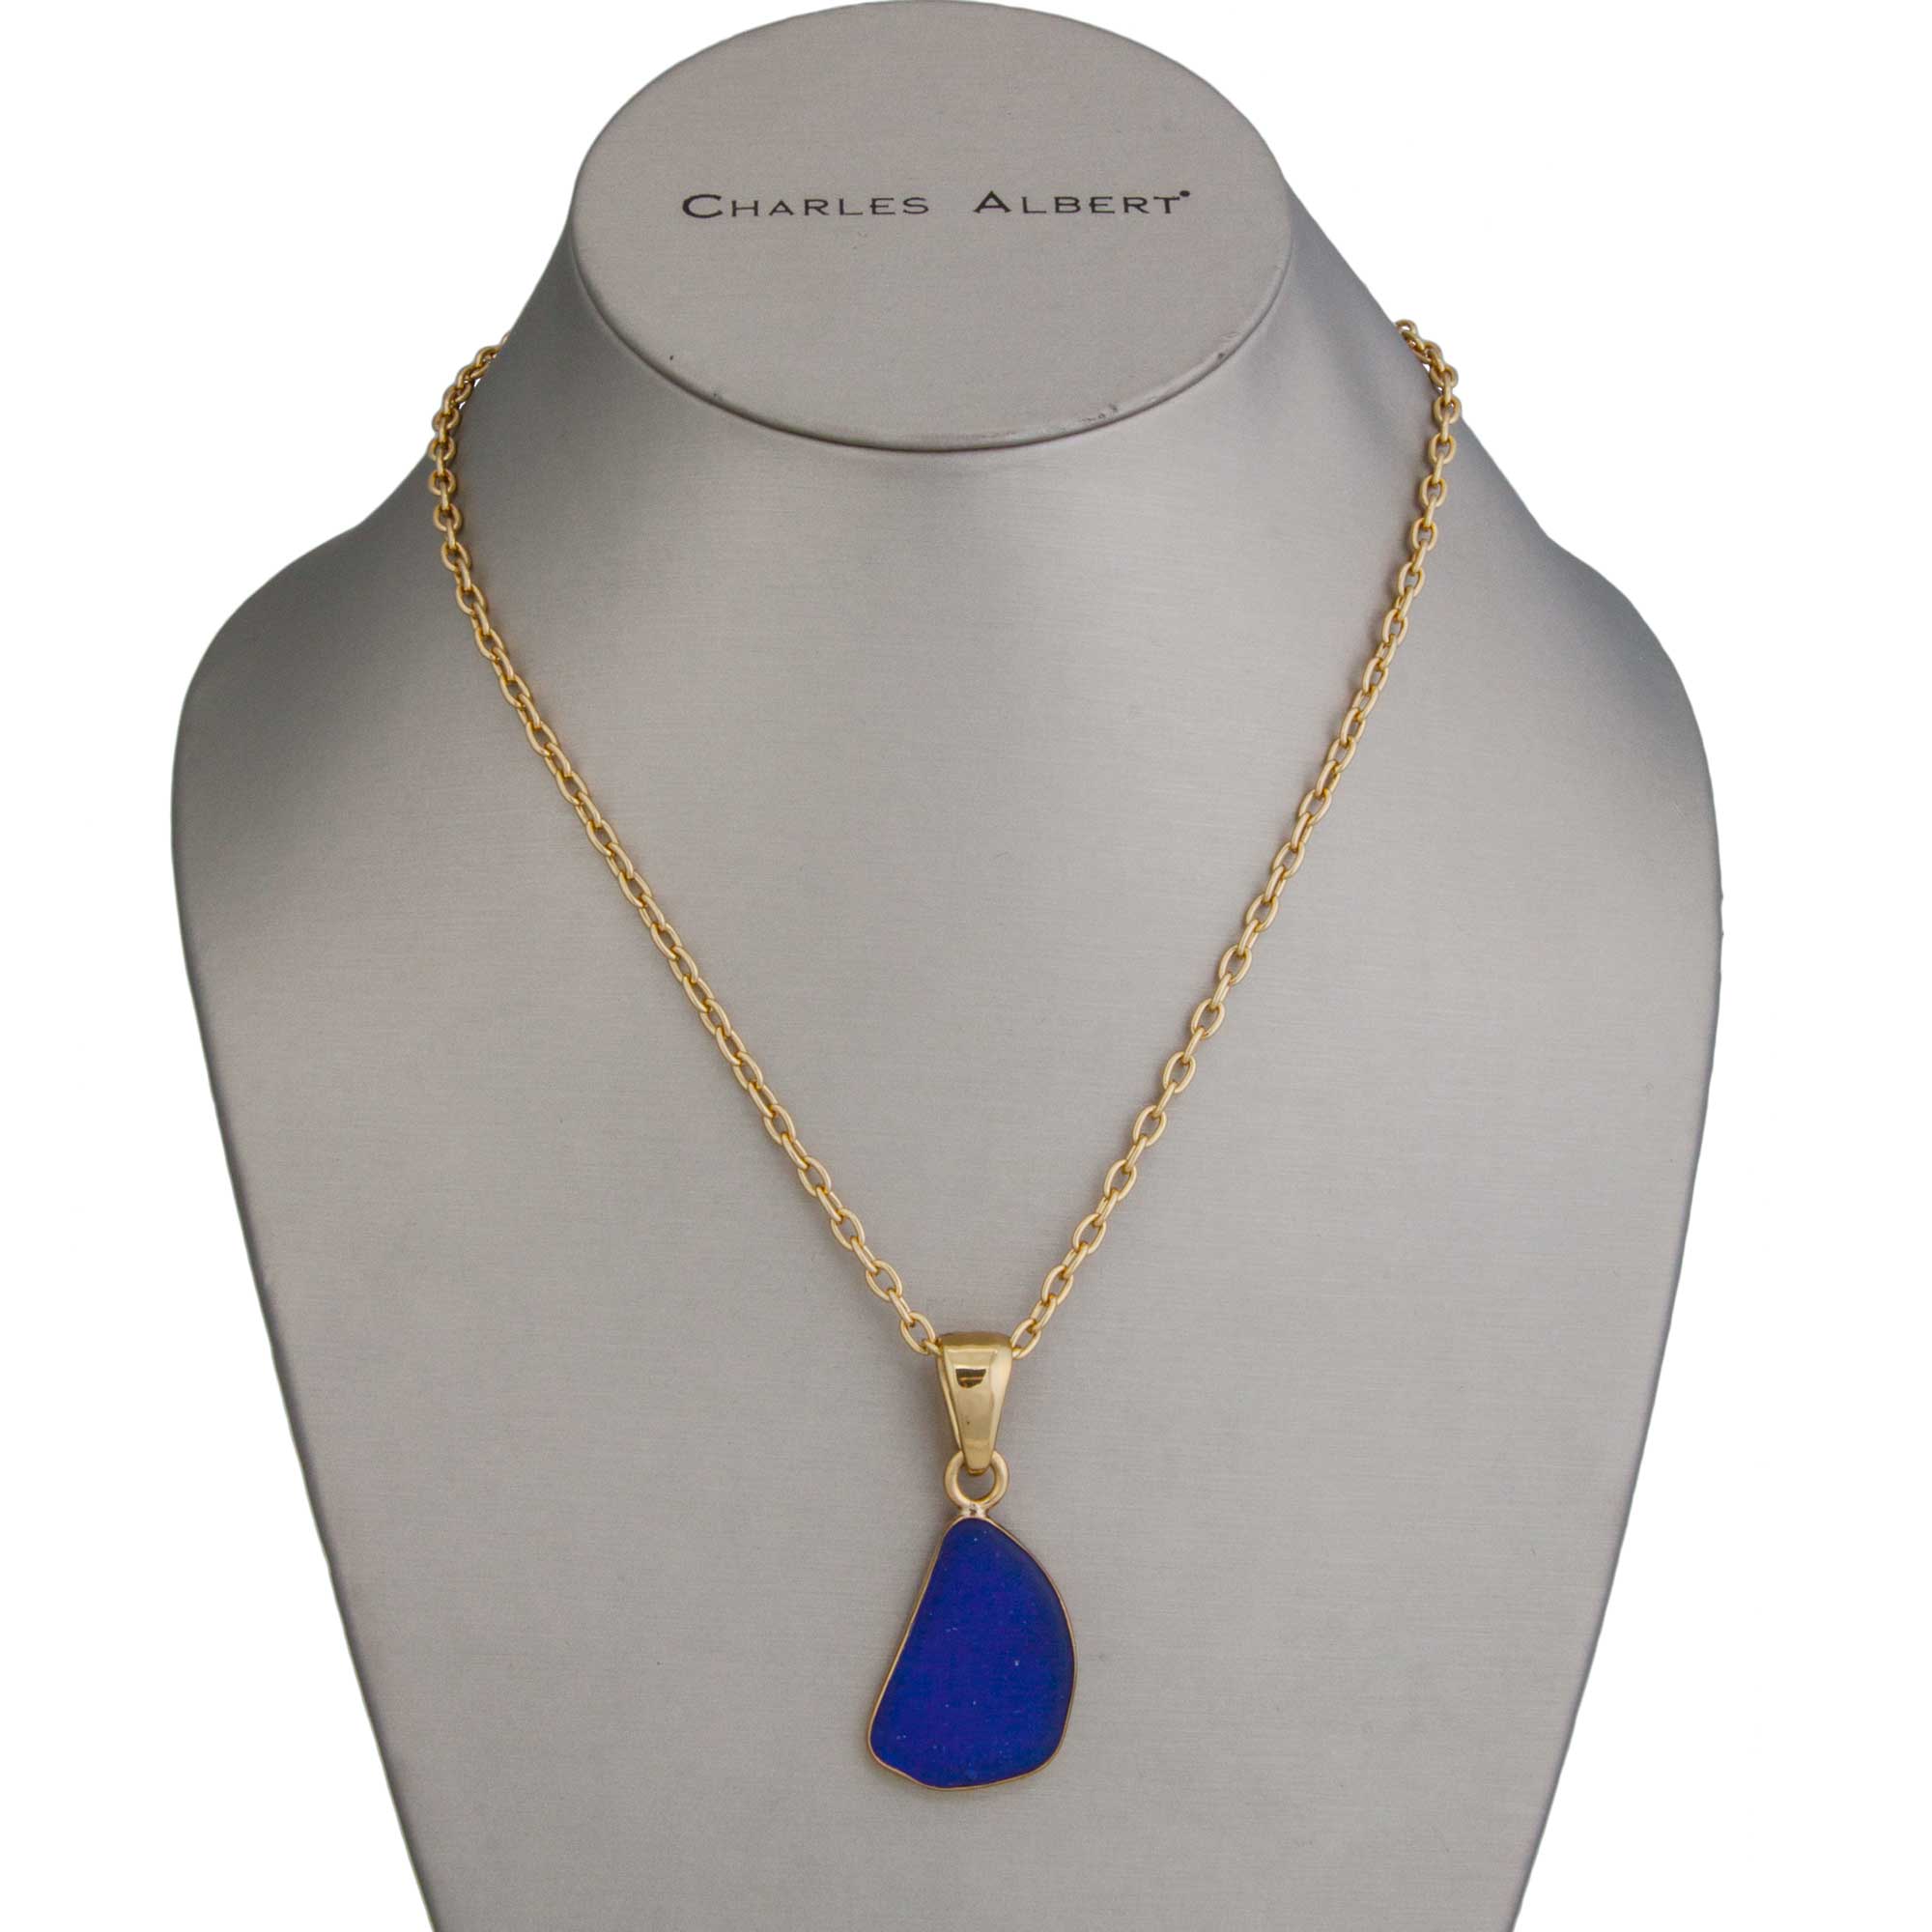 Charles Albert Jewelry - Alchemia Cobalt Recycled Glass Pendant